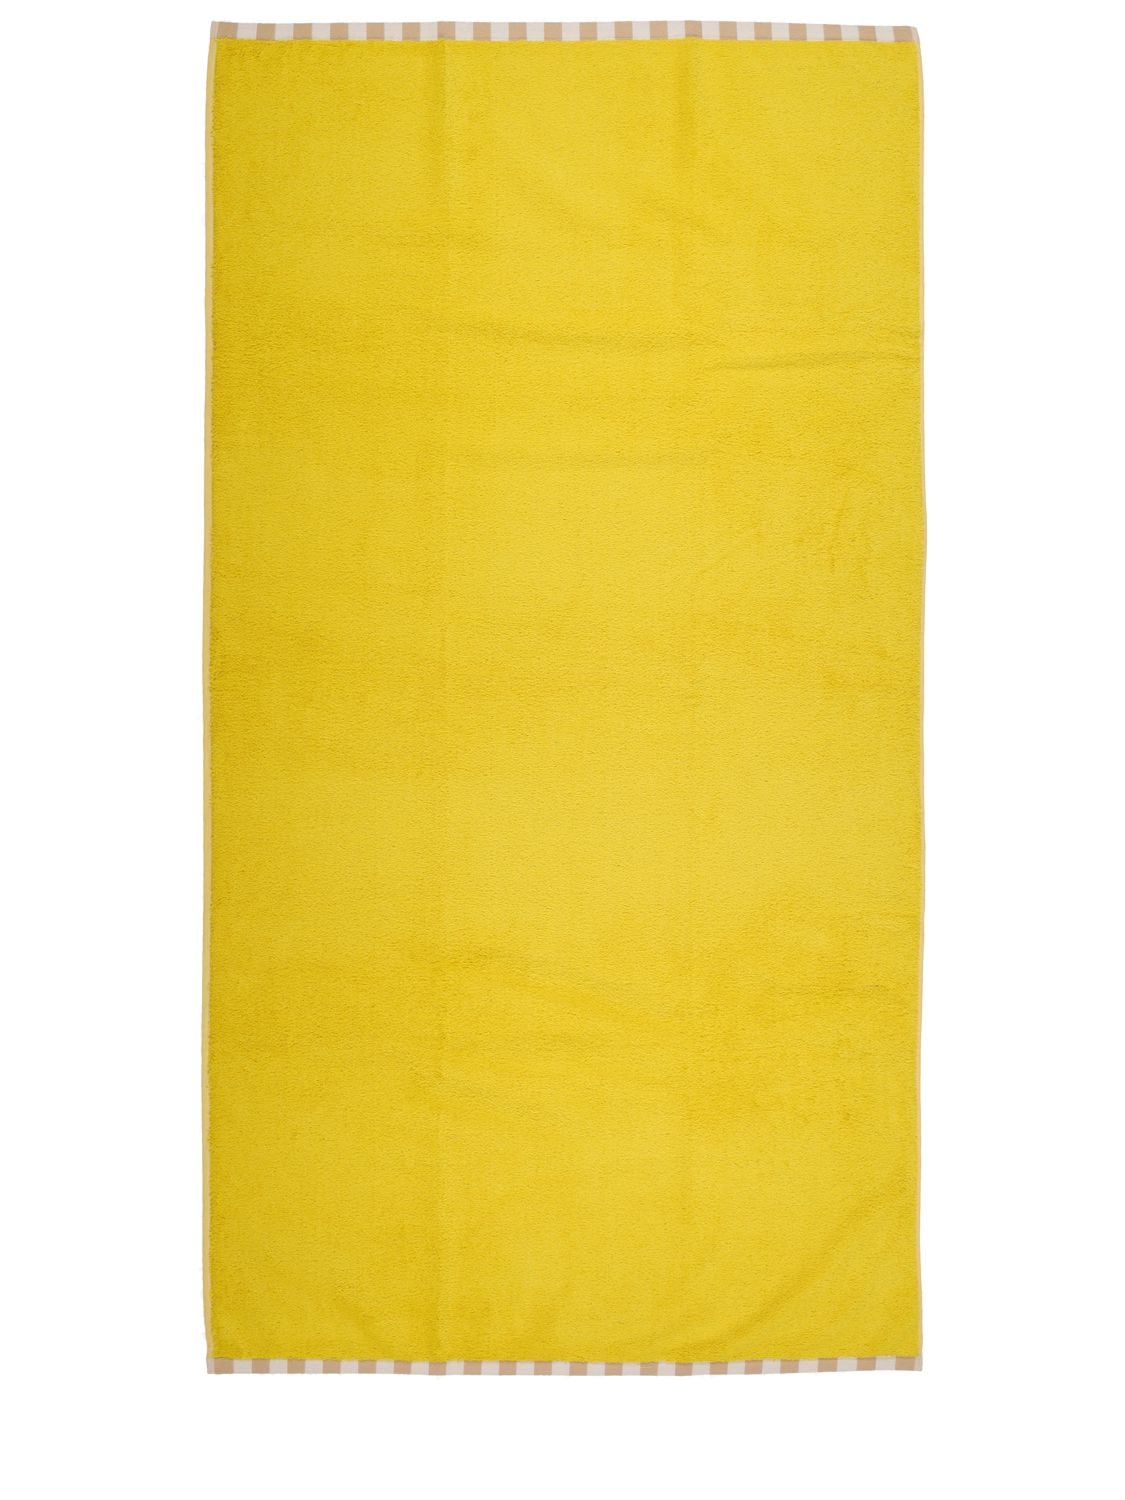 Dusen Dusen Yellow Cornflower Cotton Bath Towel